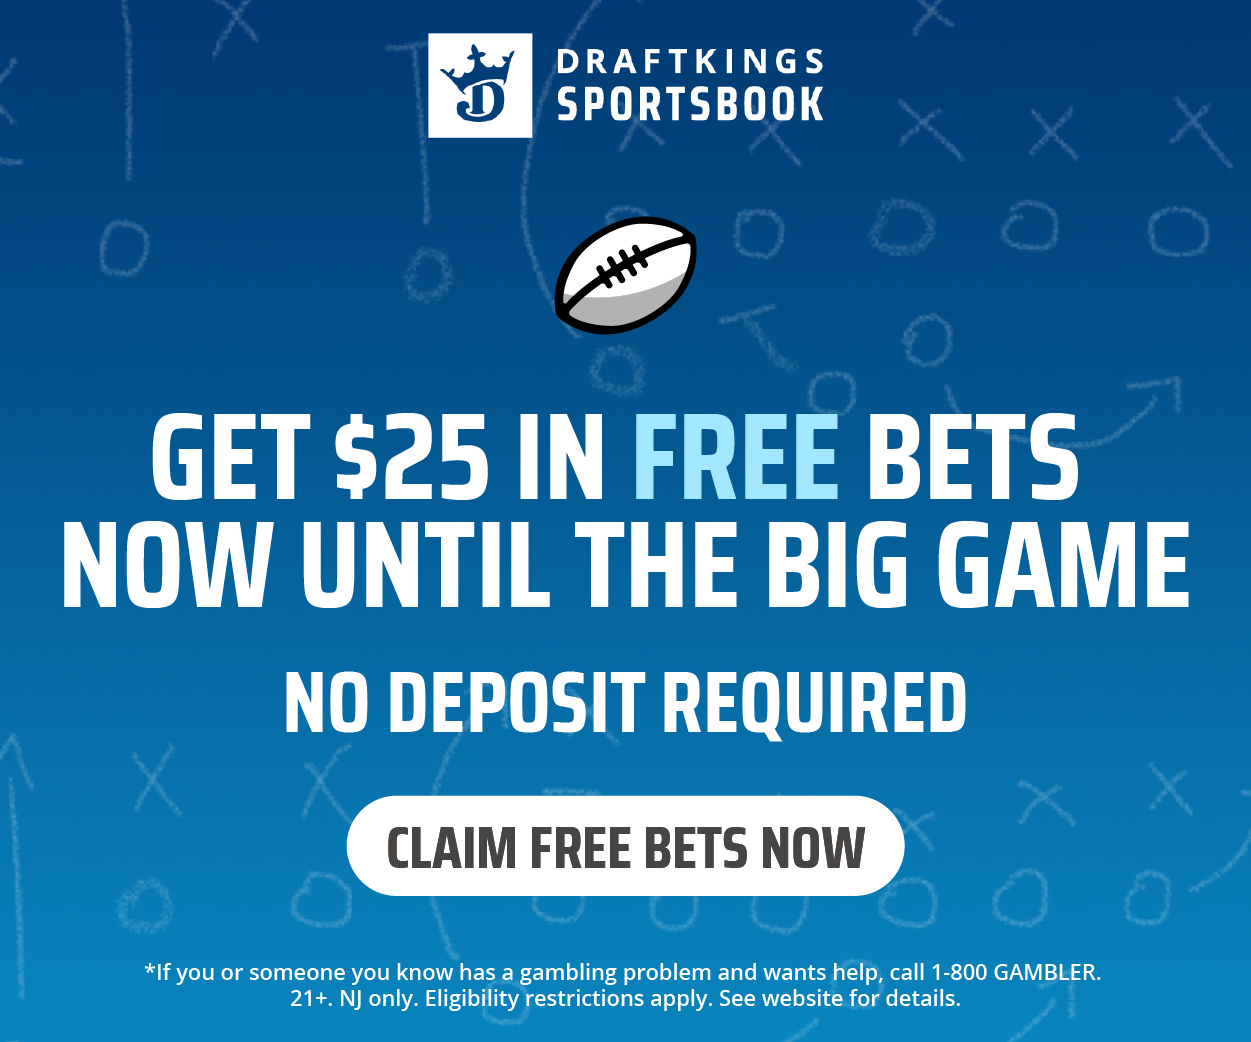 No deposit free bet bookmakers